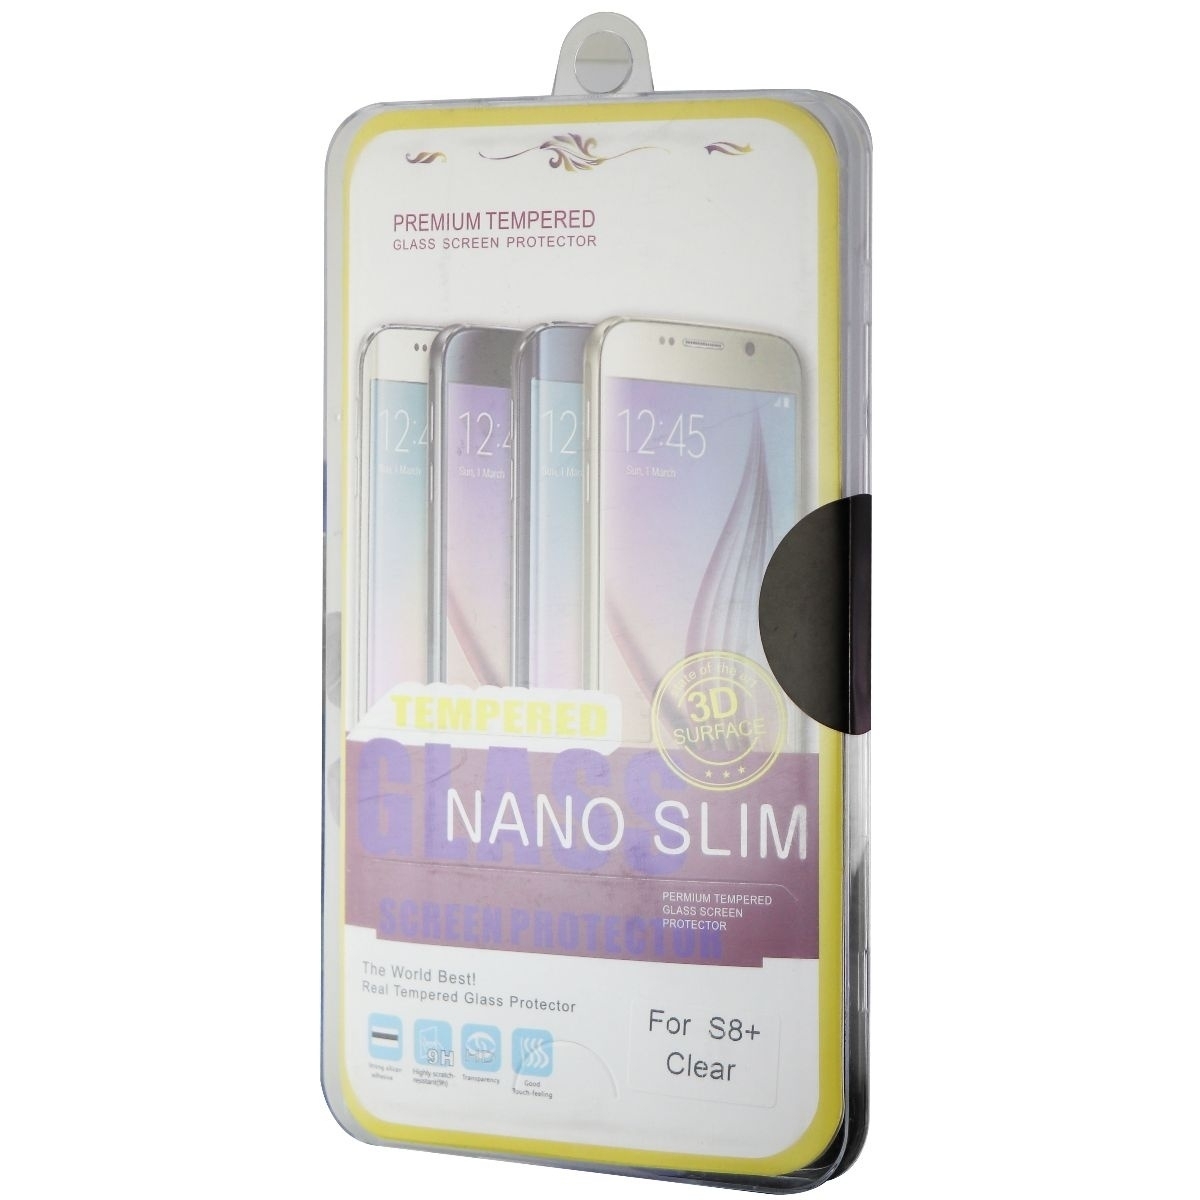 Premium Tempered Glass Nano Slim Screen Protector For Galaxy (S8+) - Clear